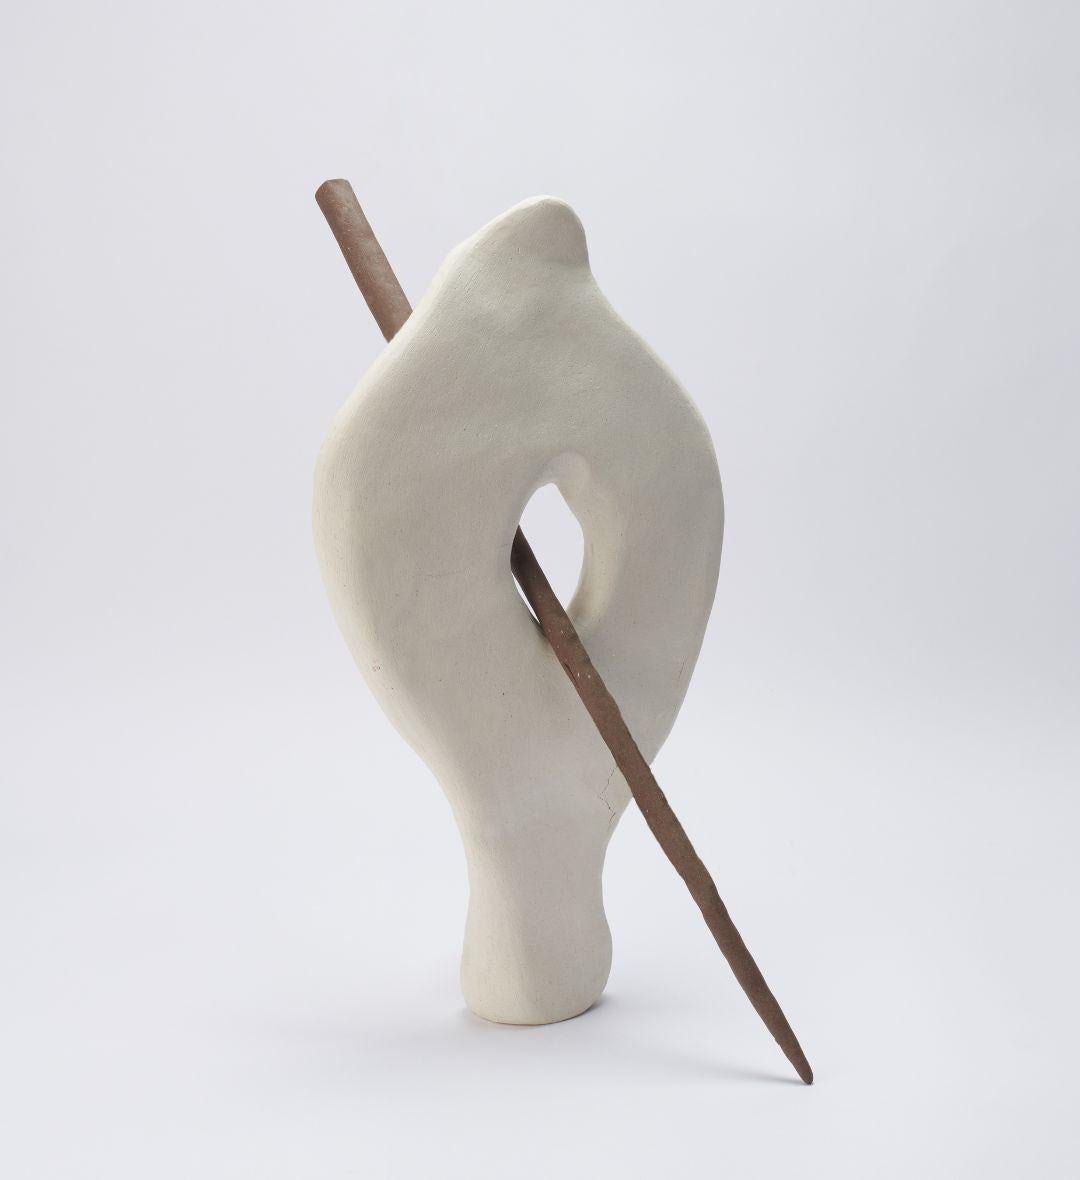 Other Balance 02 Sculpture by Joana Kieppe